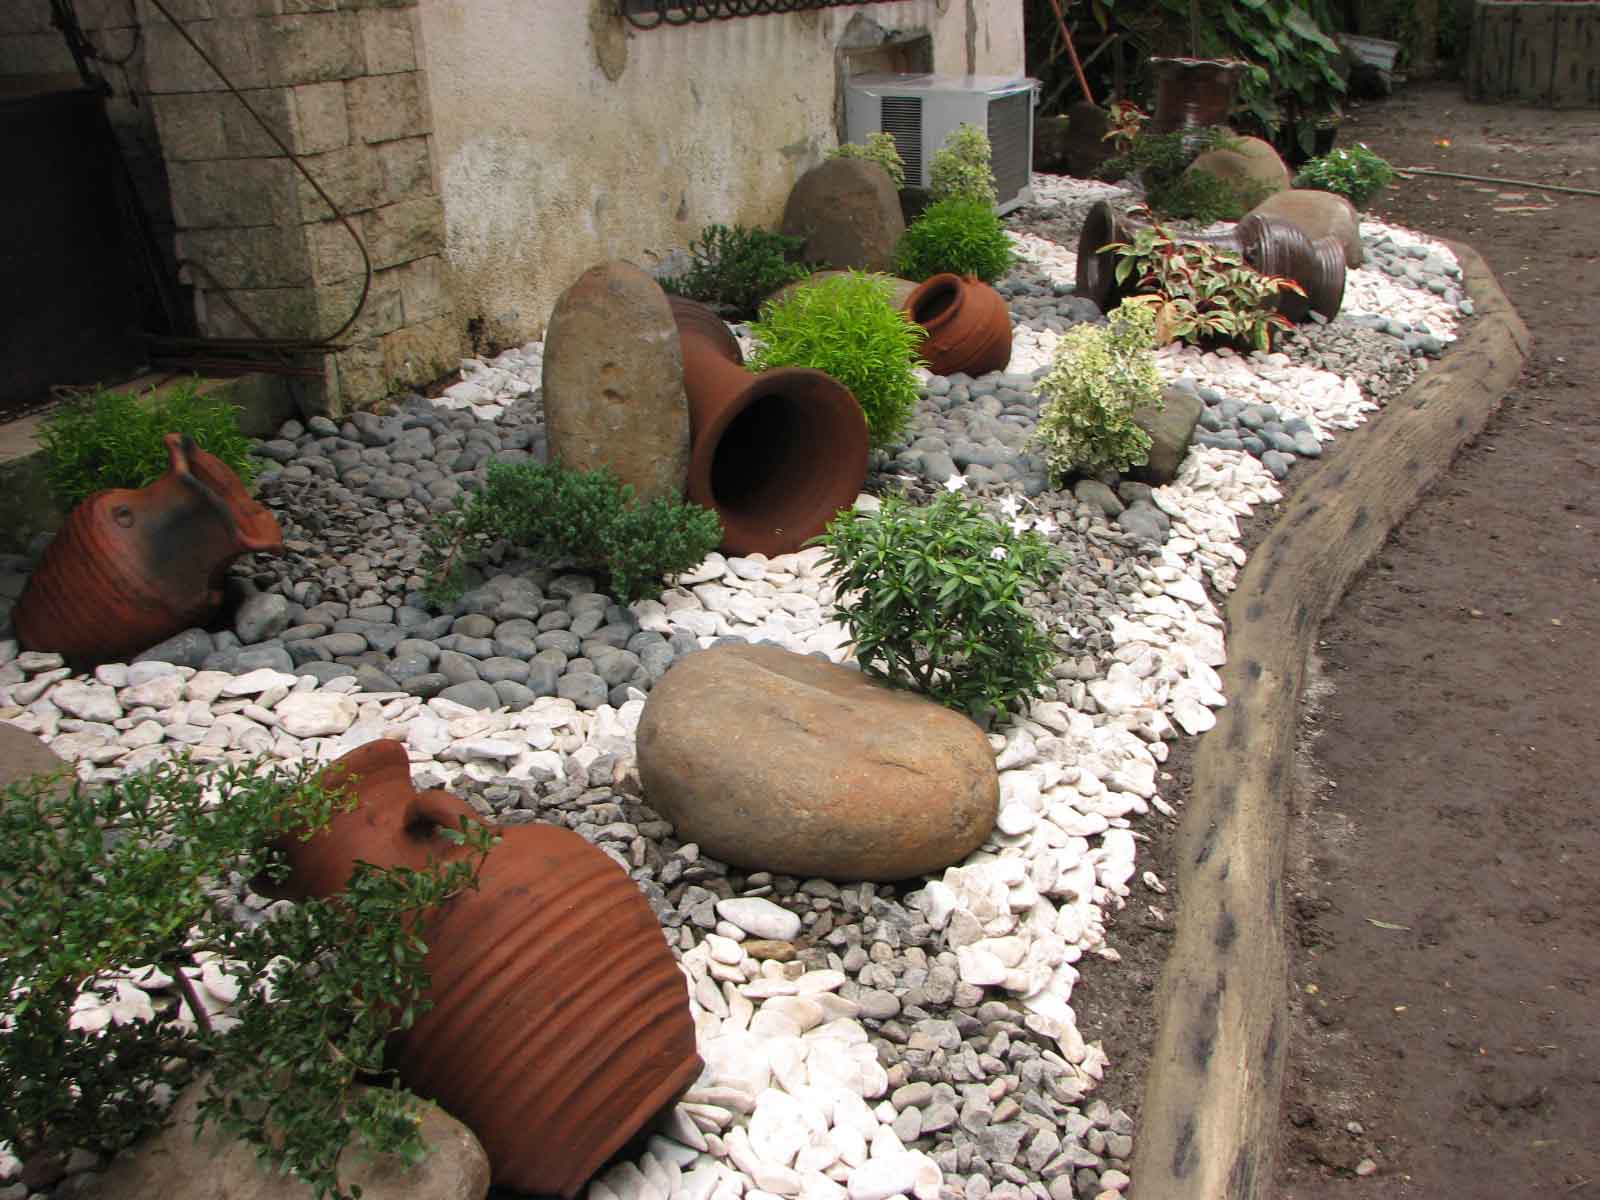 Small Garden Landscape Design